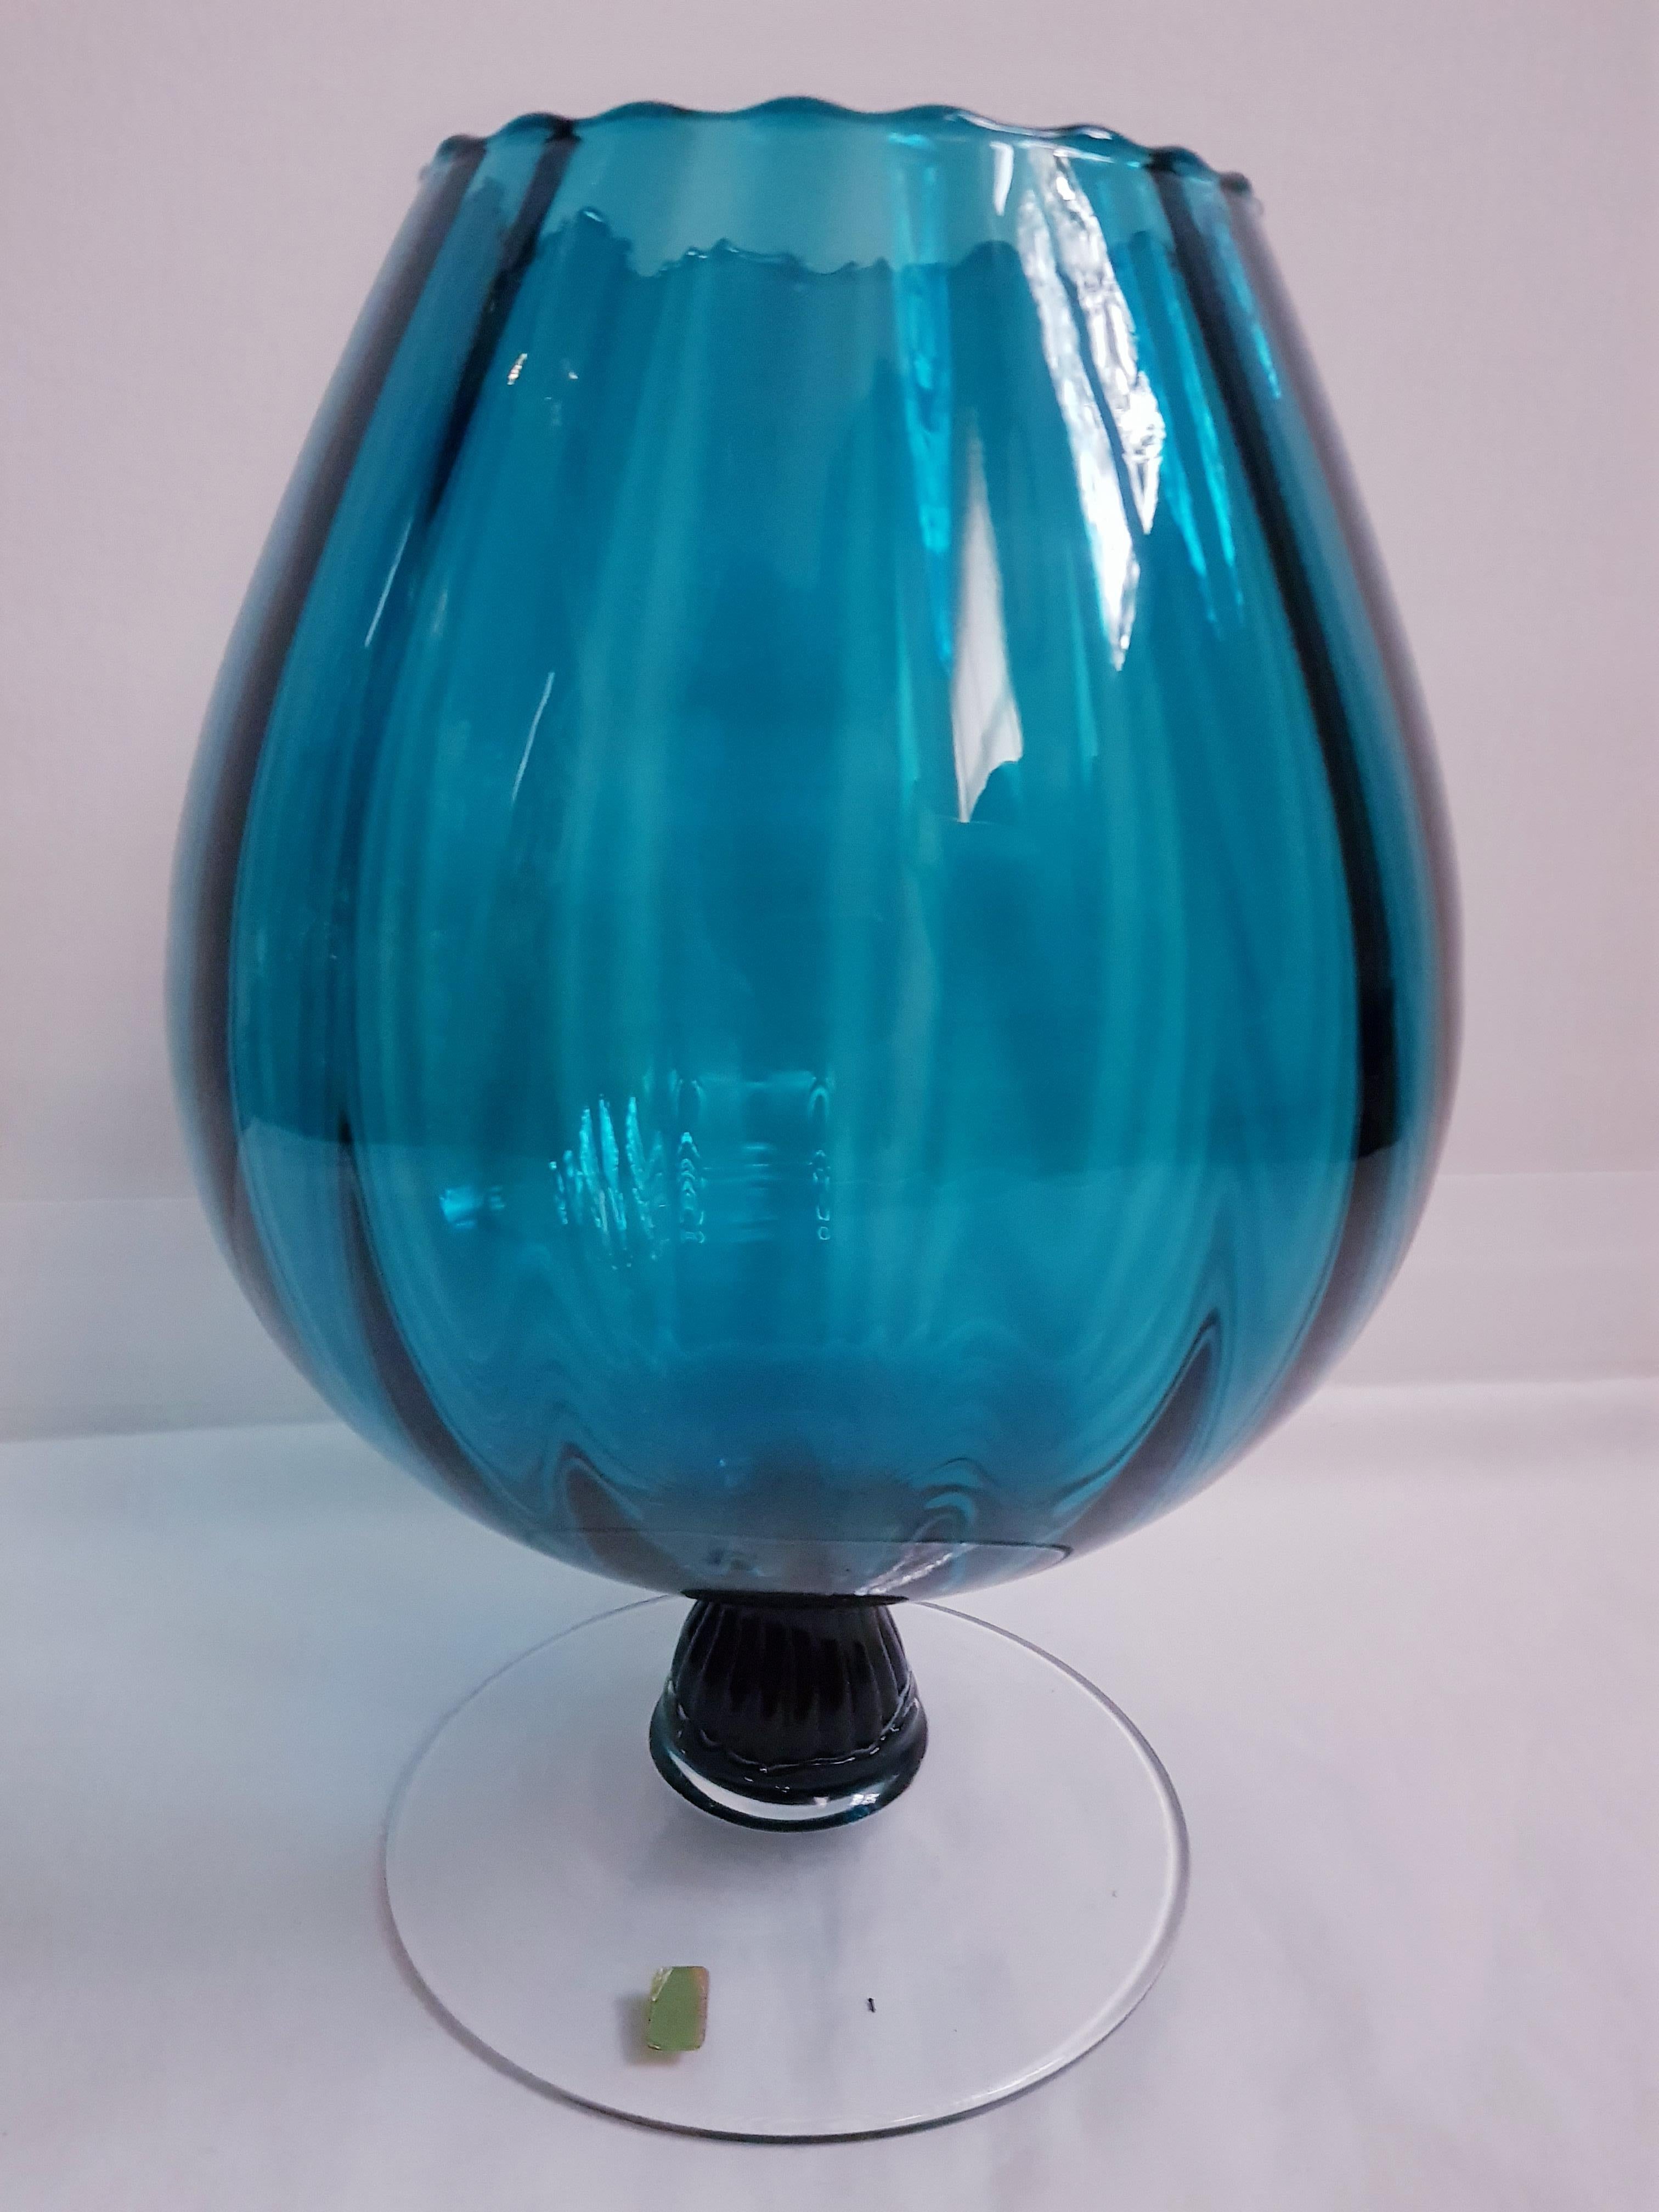 Beautiful vitange Empoli large optical decorative glass, blue and clear, original sticker brilliant condition.